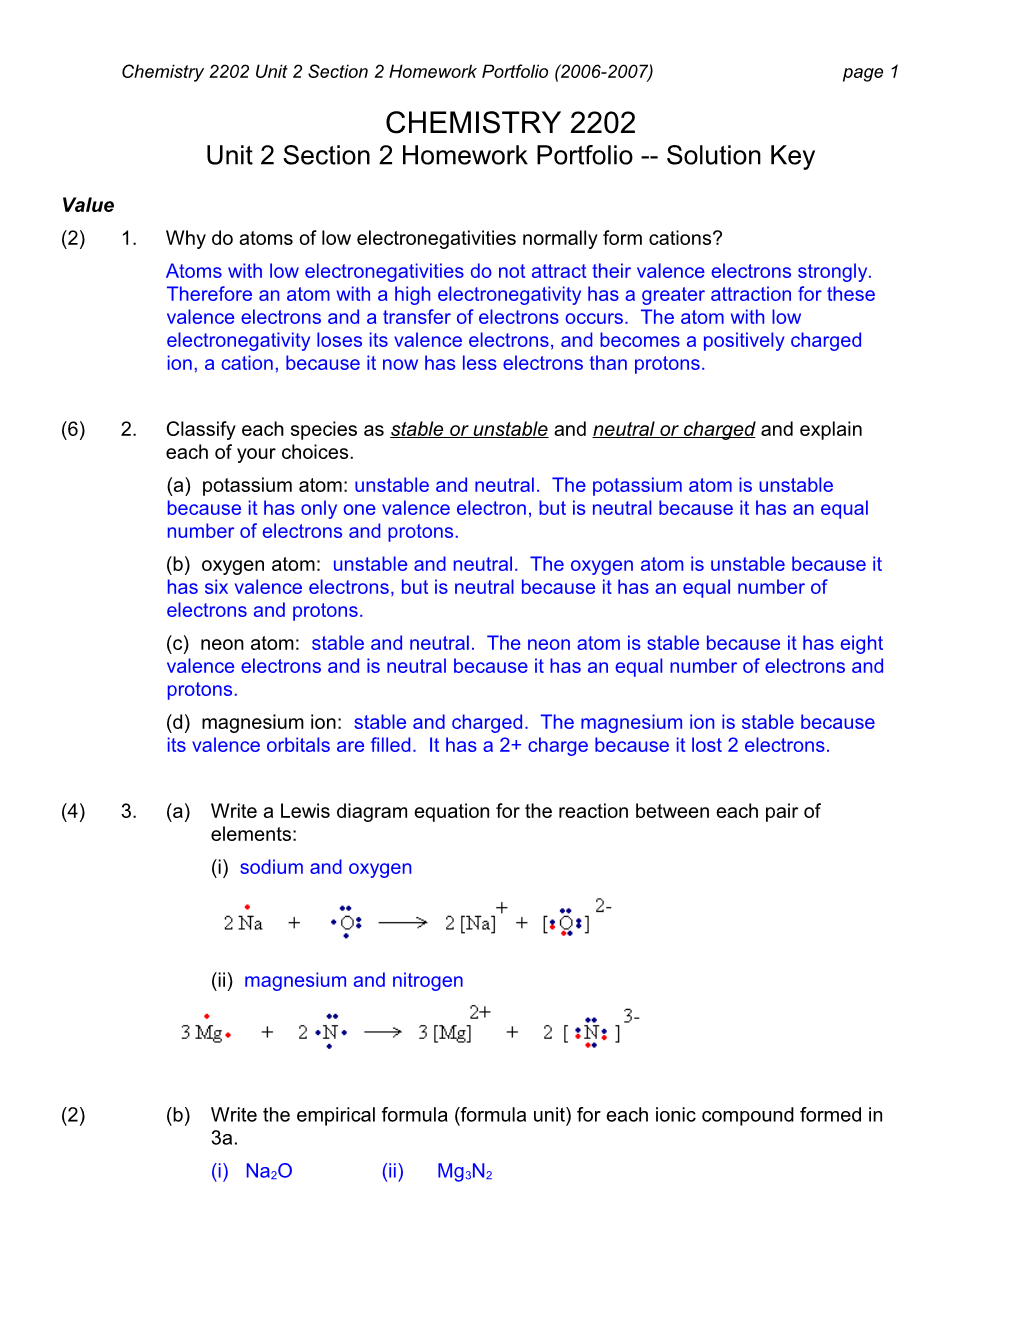 Chemistry 2202 Unit 2Section 2Homework Portfolio (2006-2007)Page 1